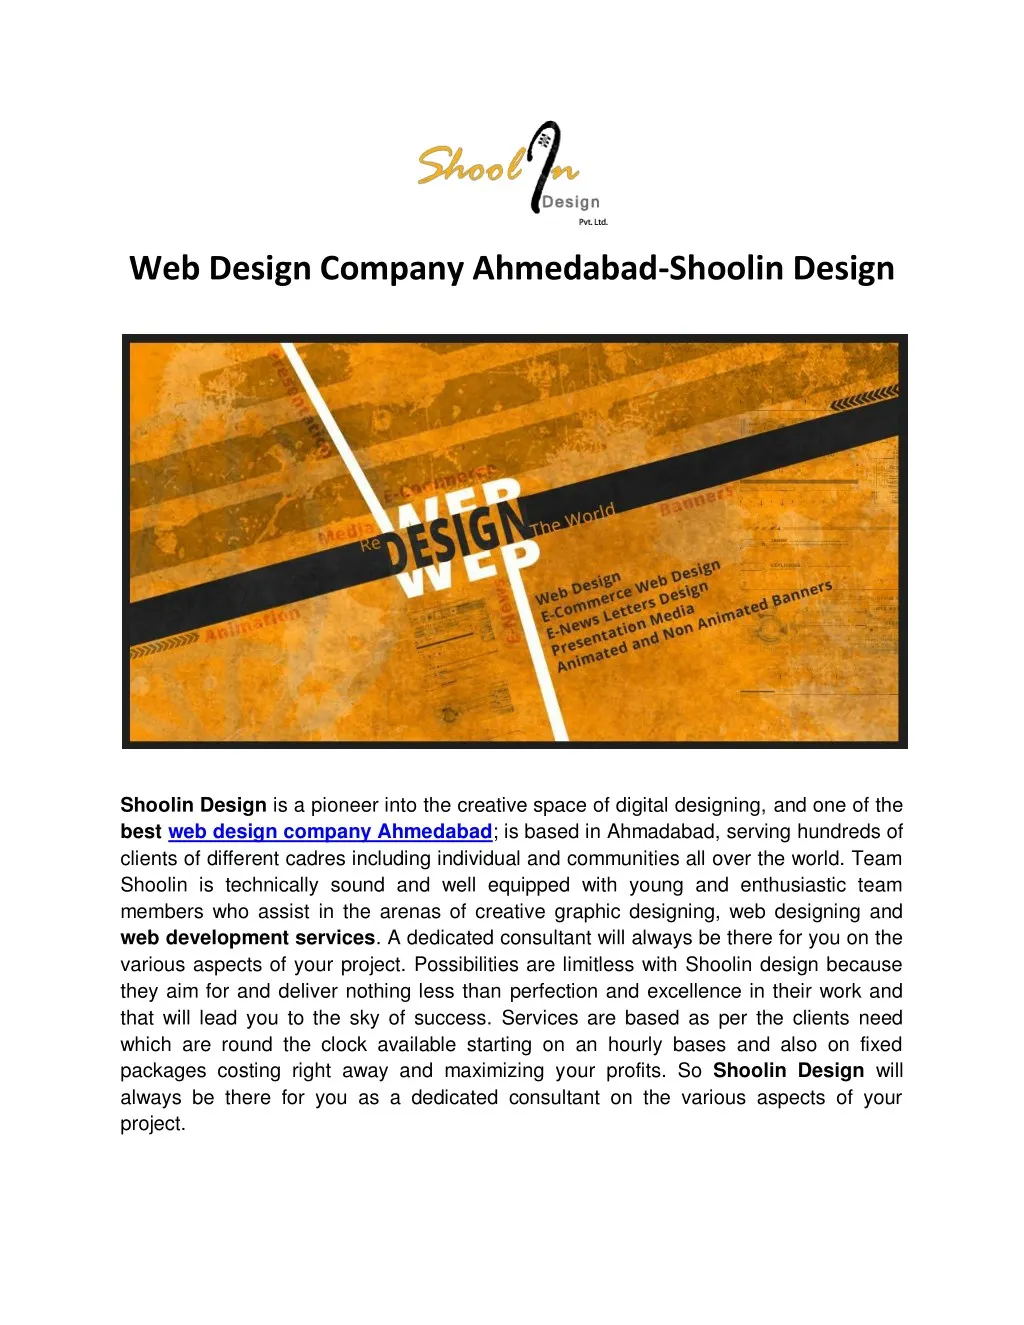 web design company ahmedabad shoolin design